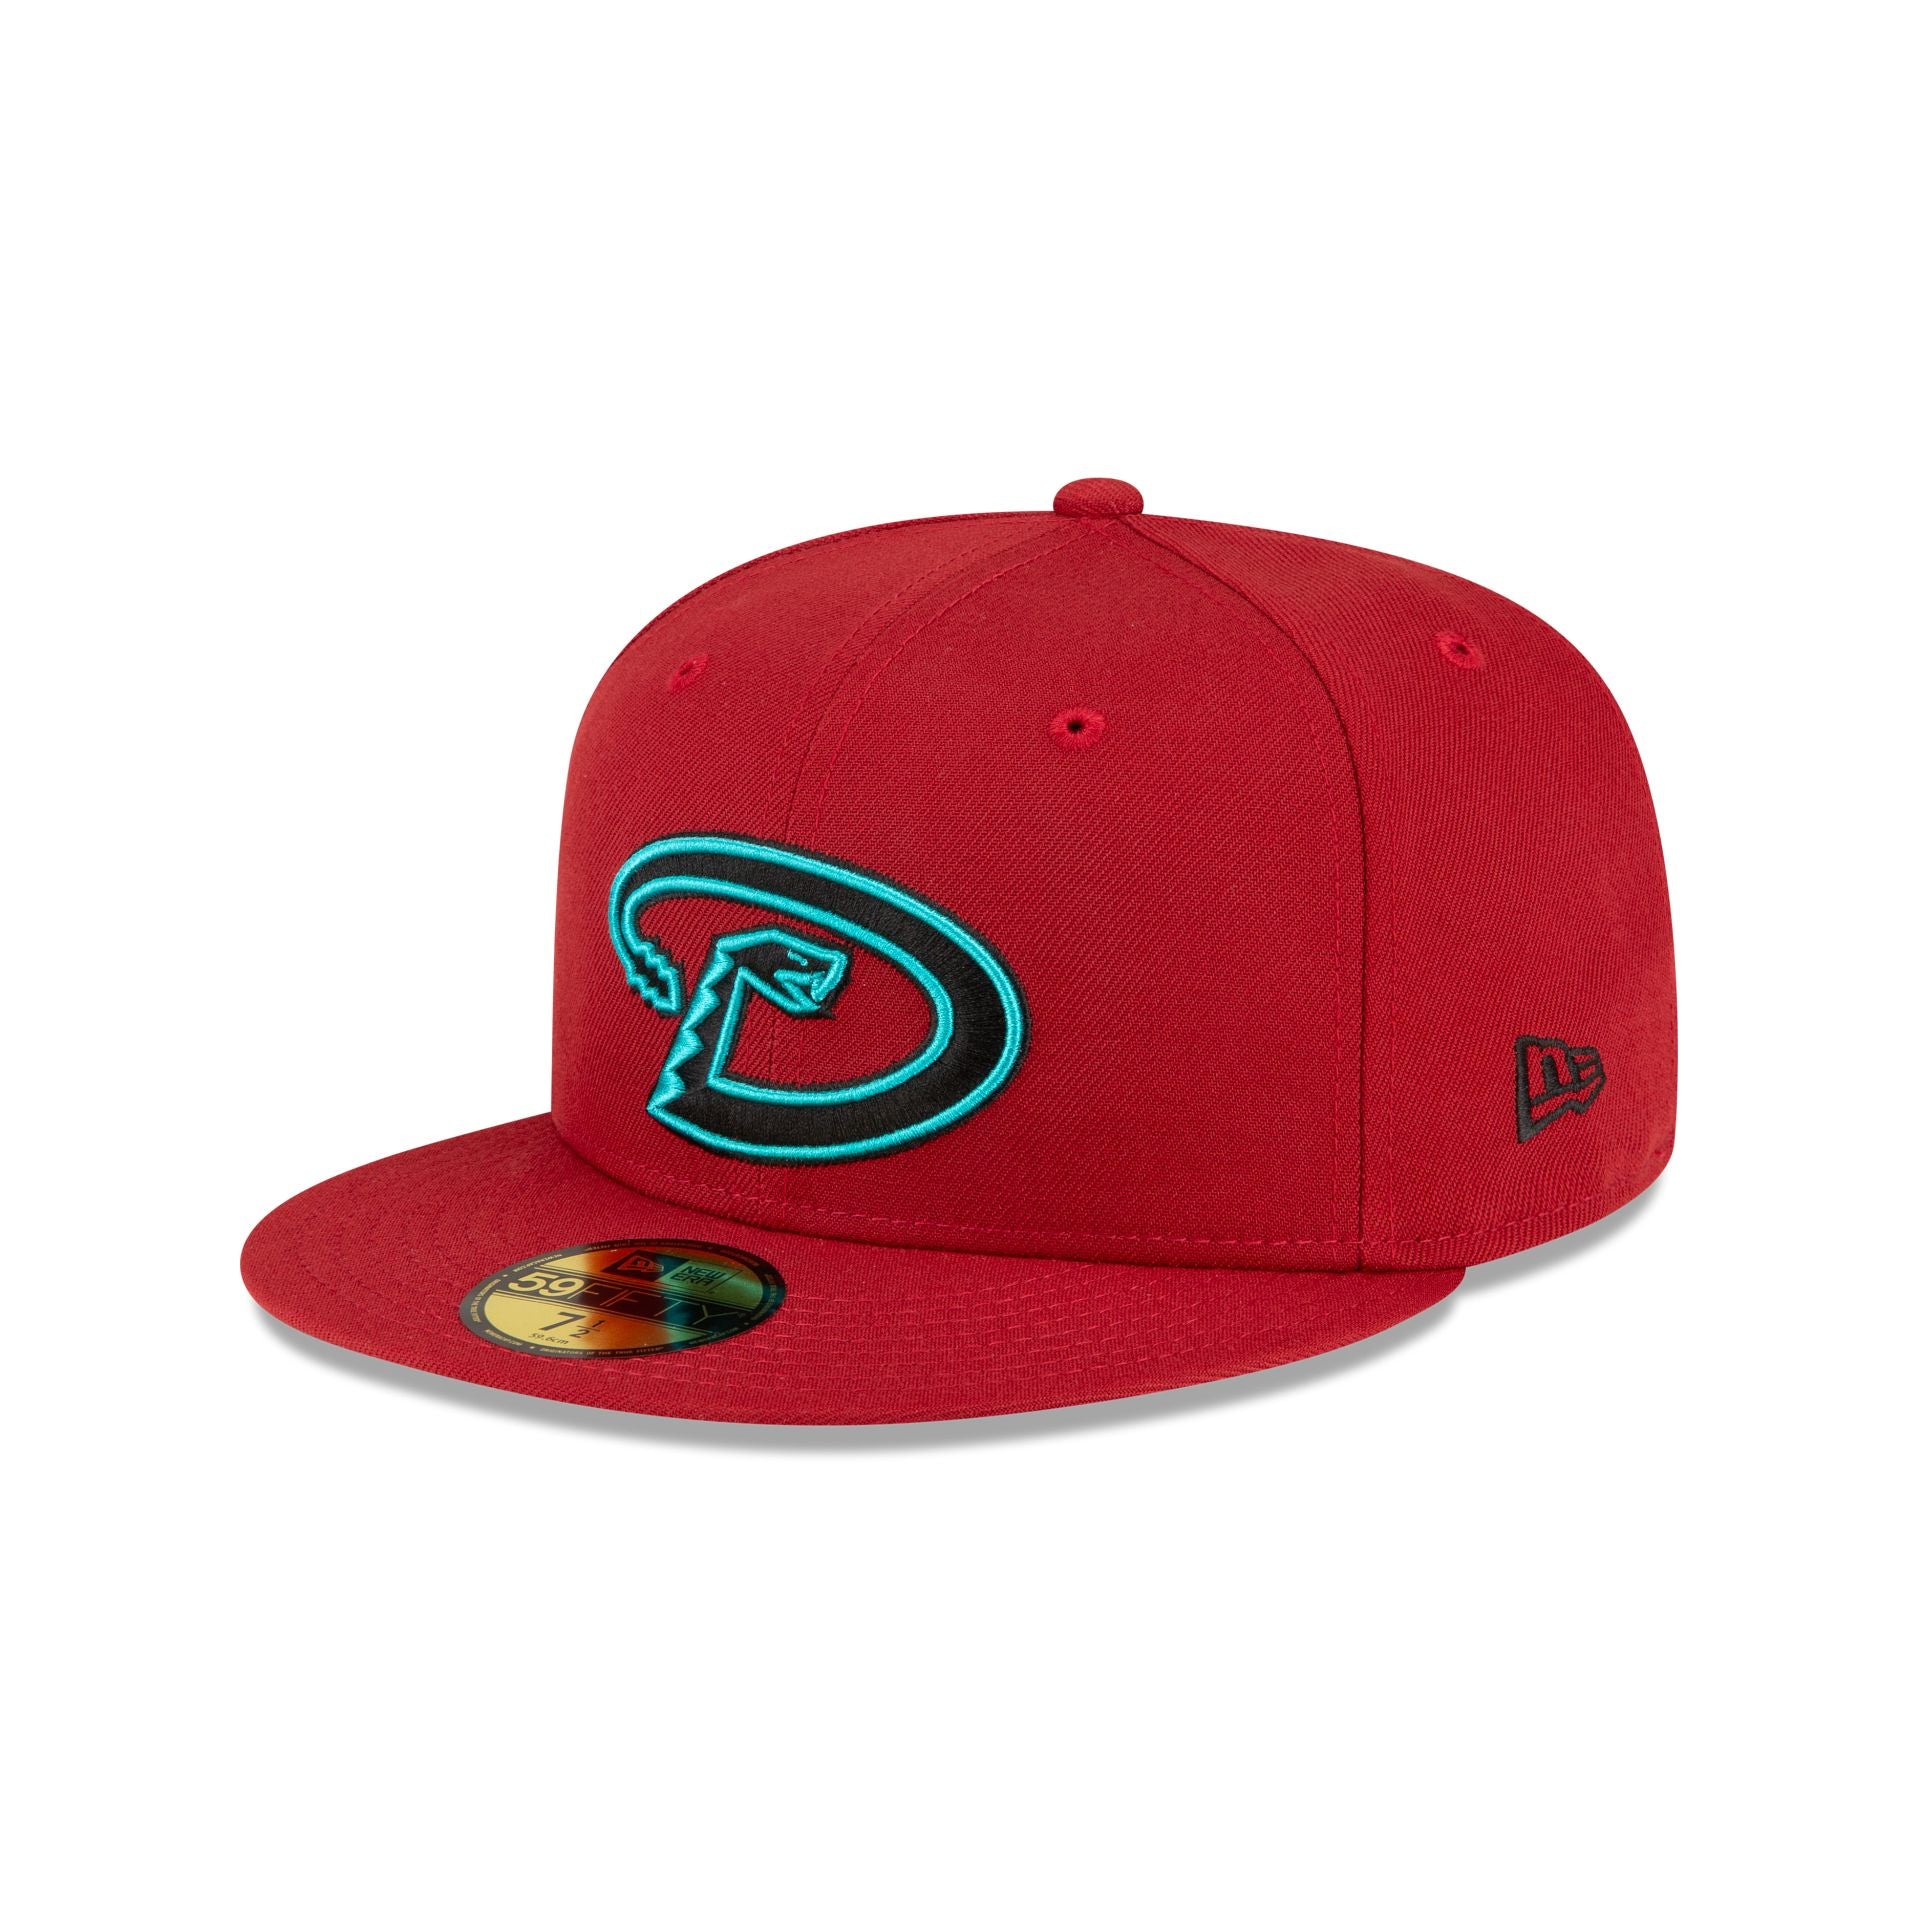 Arizona Diamondbacks New Era 5950 Fitted Hat - Game - Cardinal